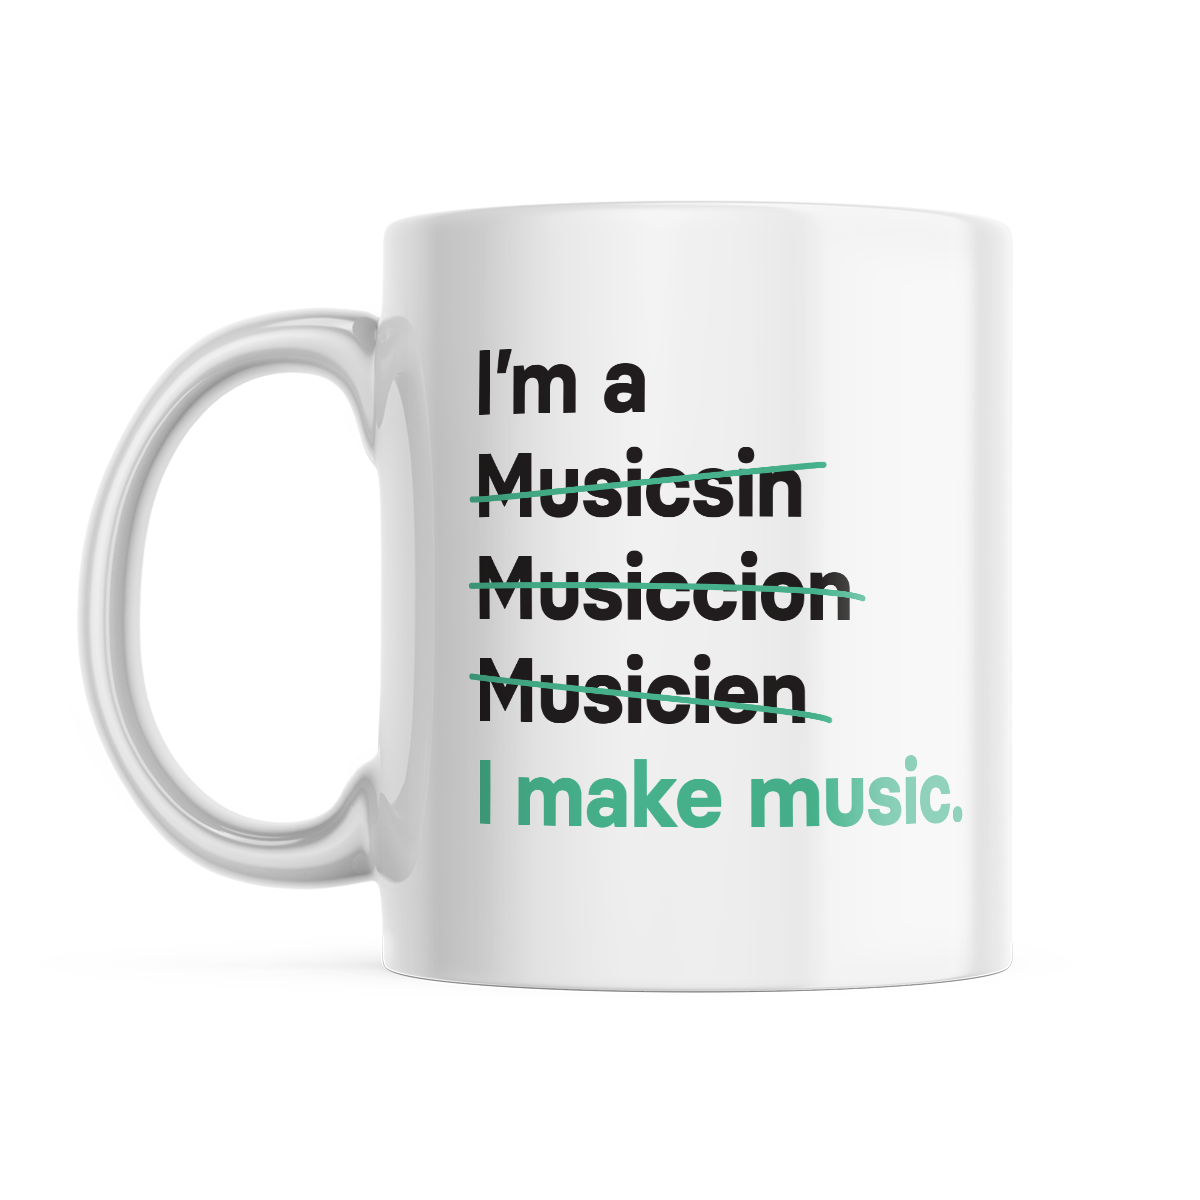 I'm a Musician